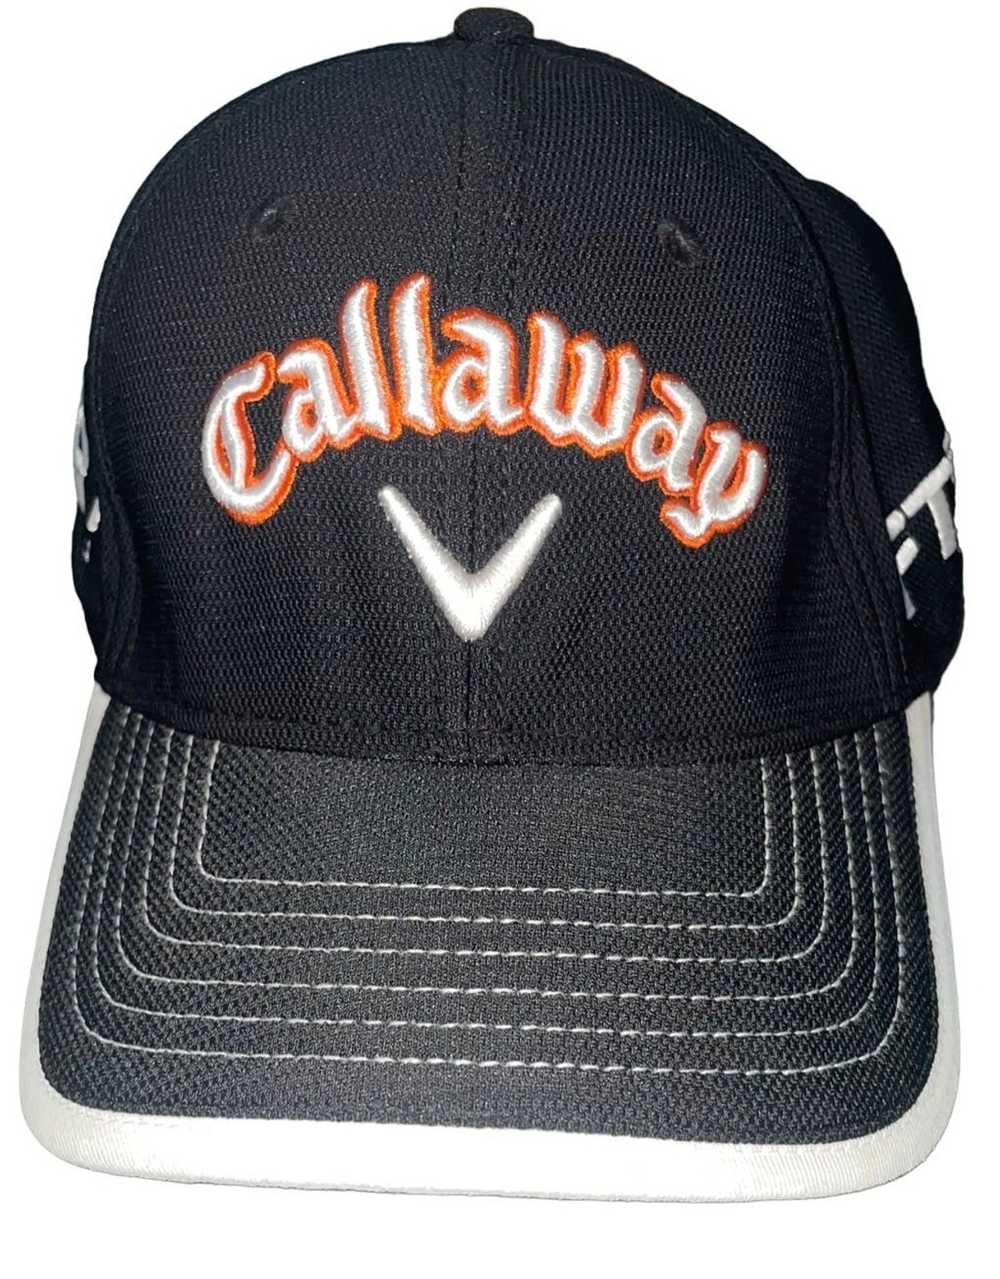 Callaway Golf Callaway Tour i Series Golf Hat - image 1